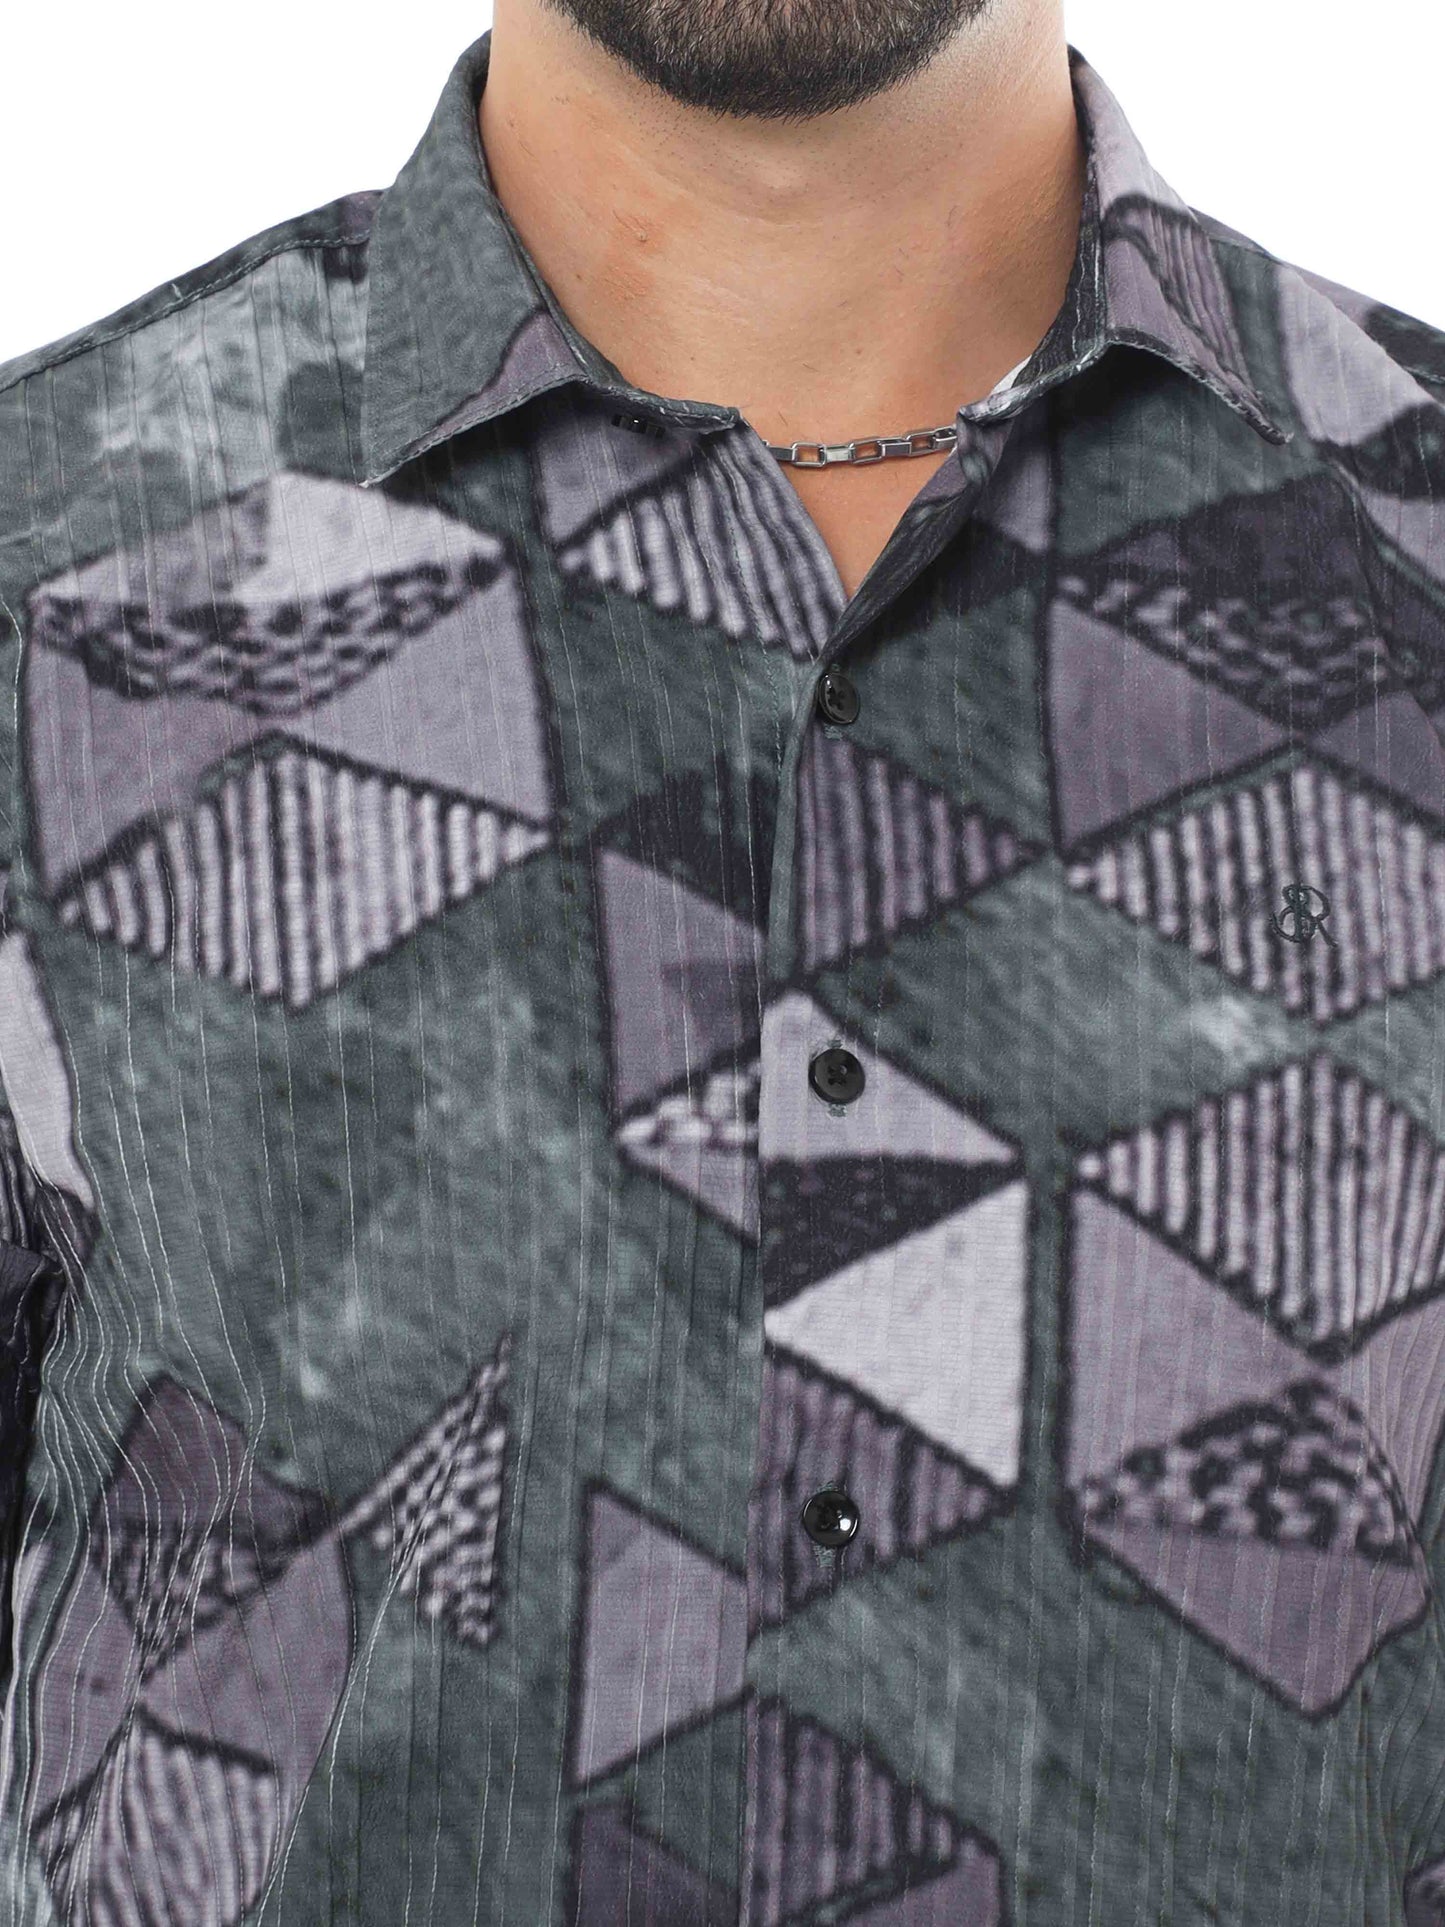 Geometric Print Grey Shirt